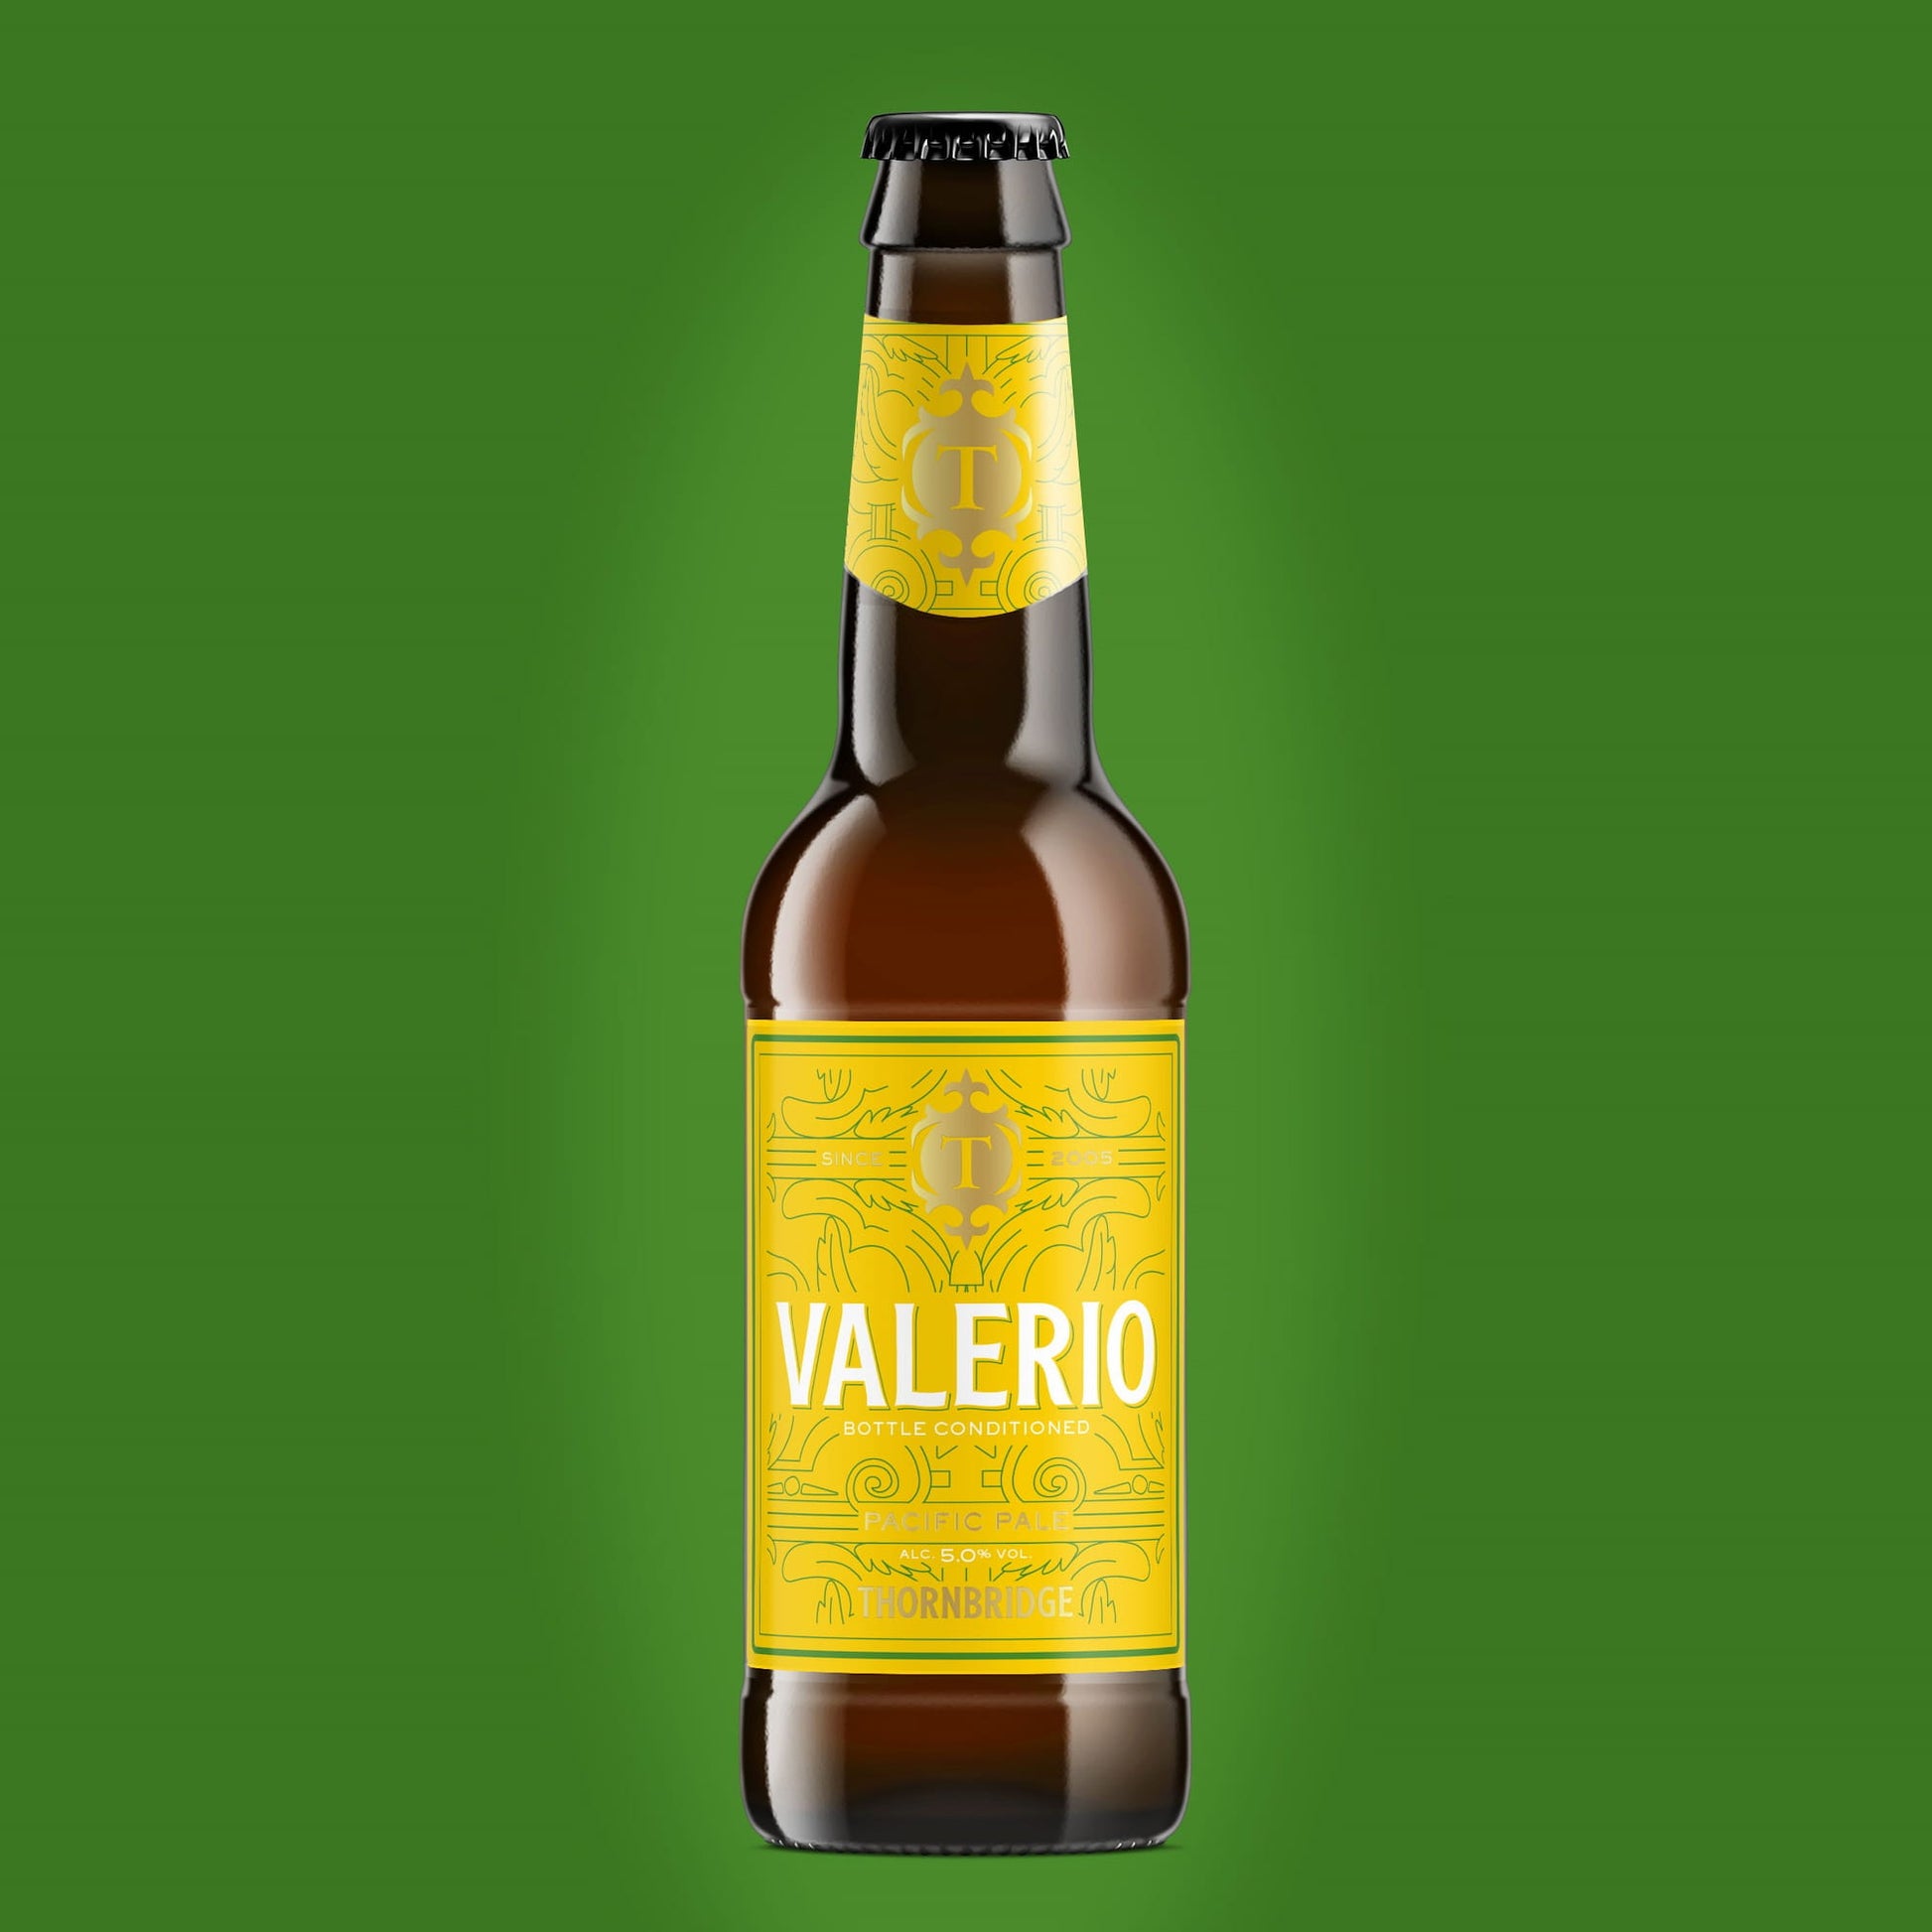 Valerio, 5.0% Bottle Conditioned Pacific Pale Ale Beer - Single Bottle Thornbridge